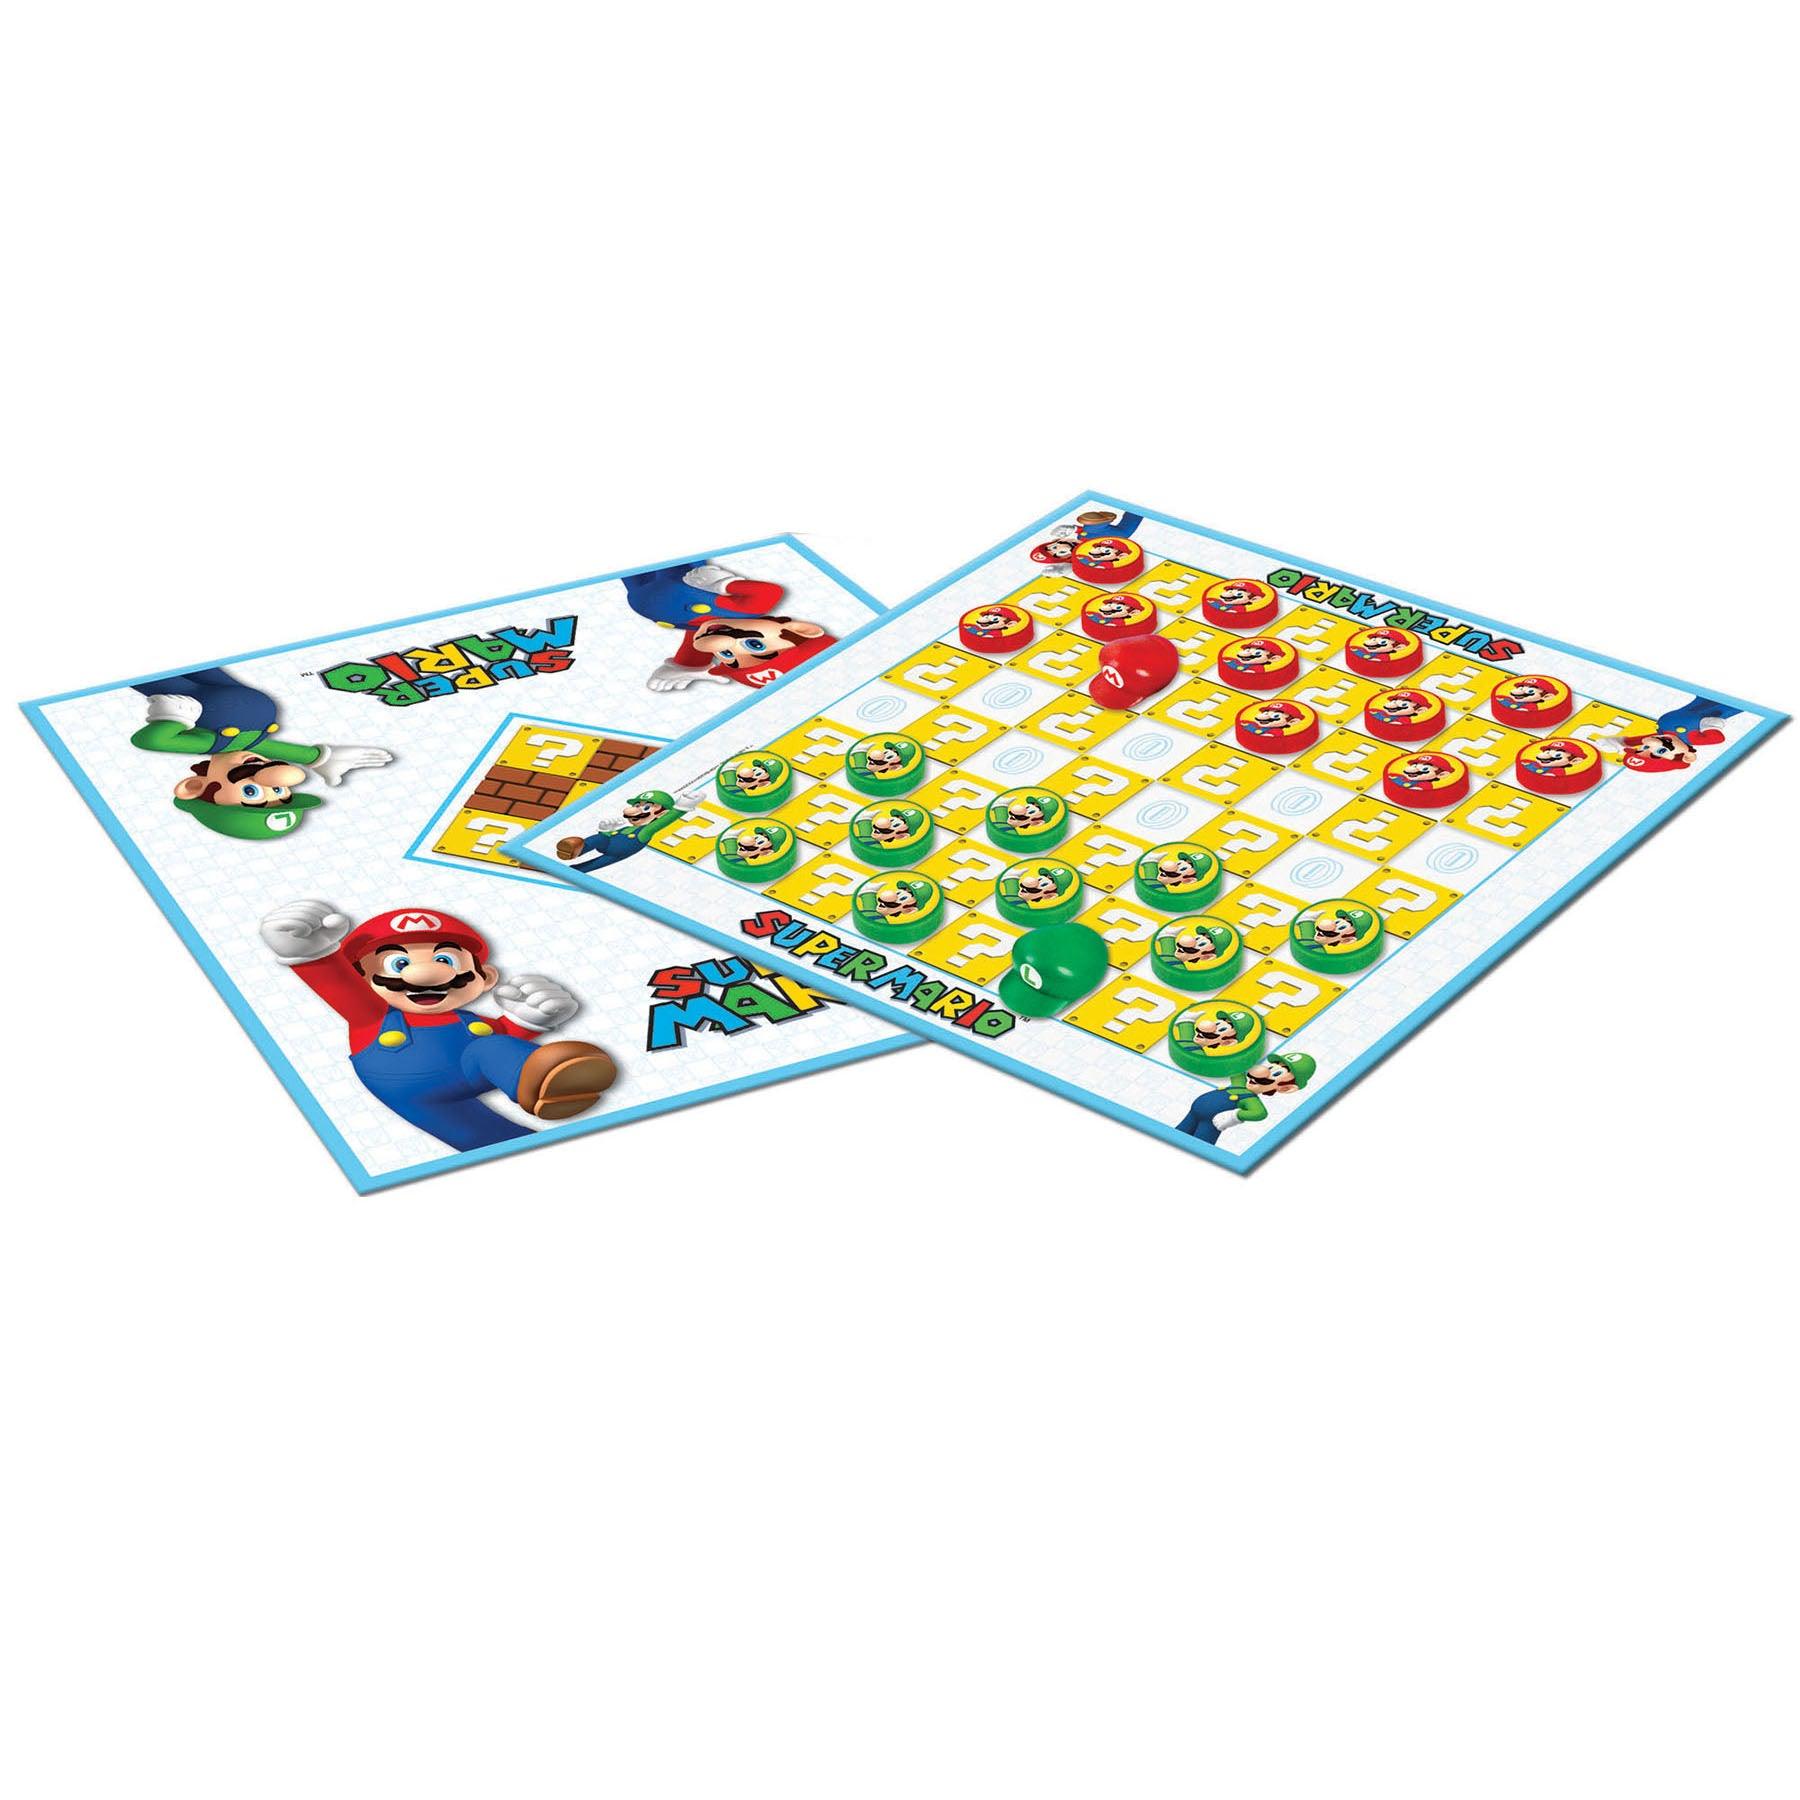 Super Mario™ Checkers & Tic Tac Toe Collector's Game Set - Loomini